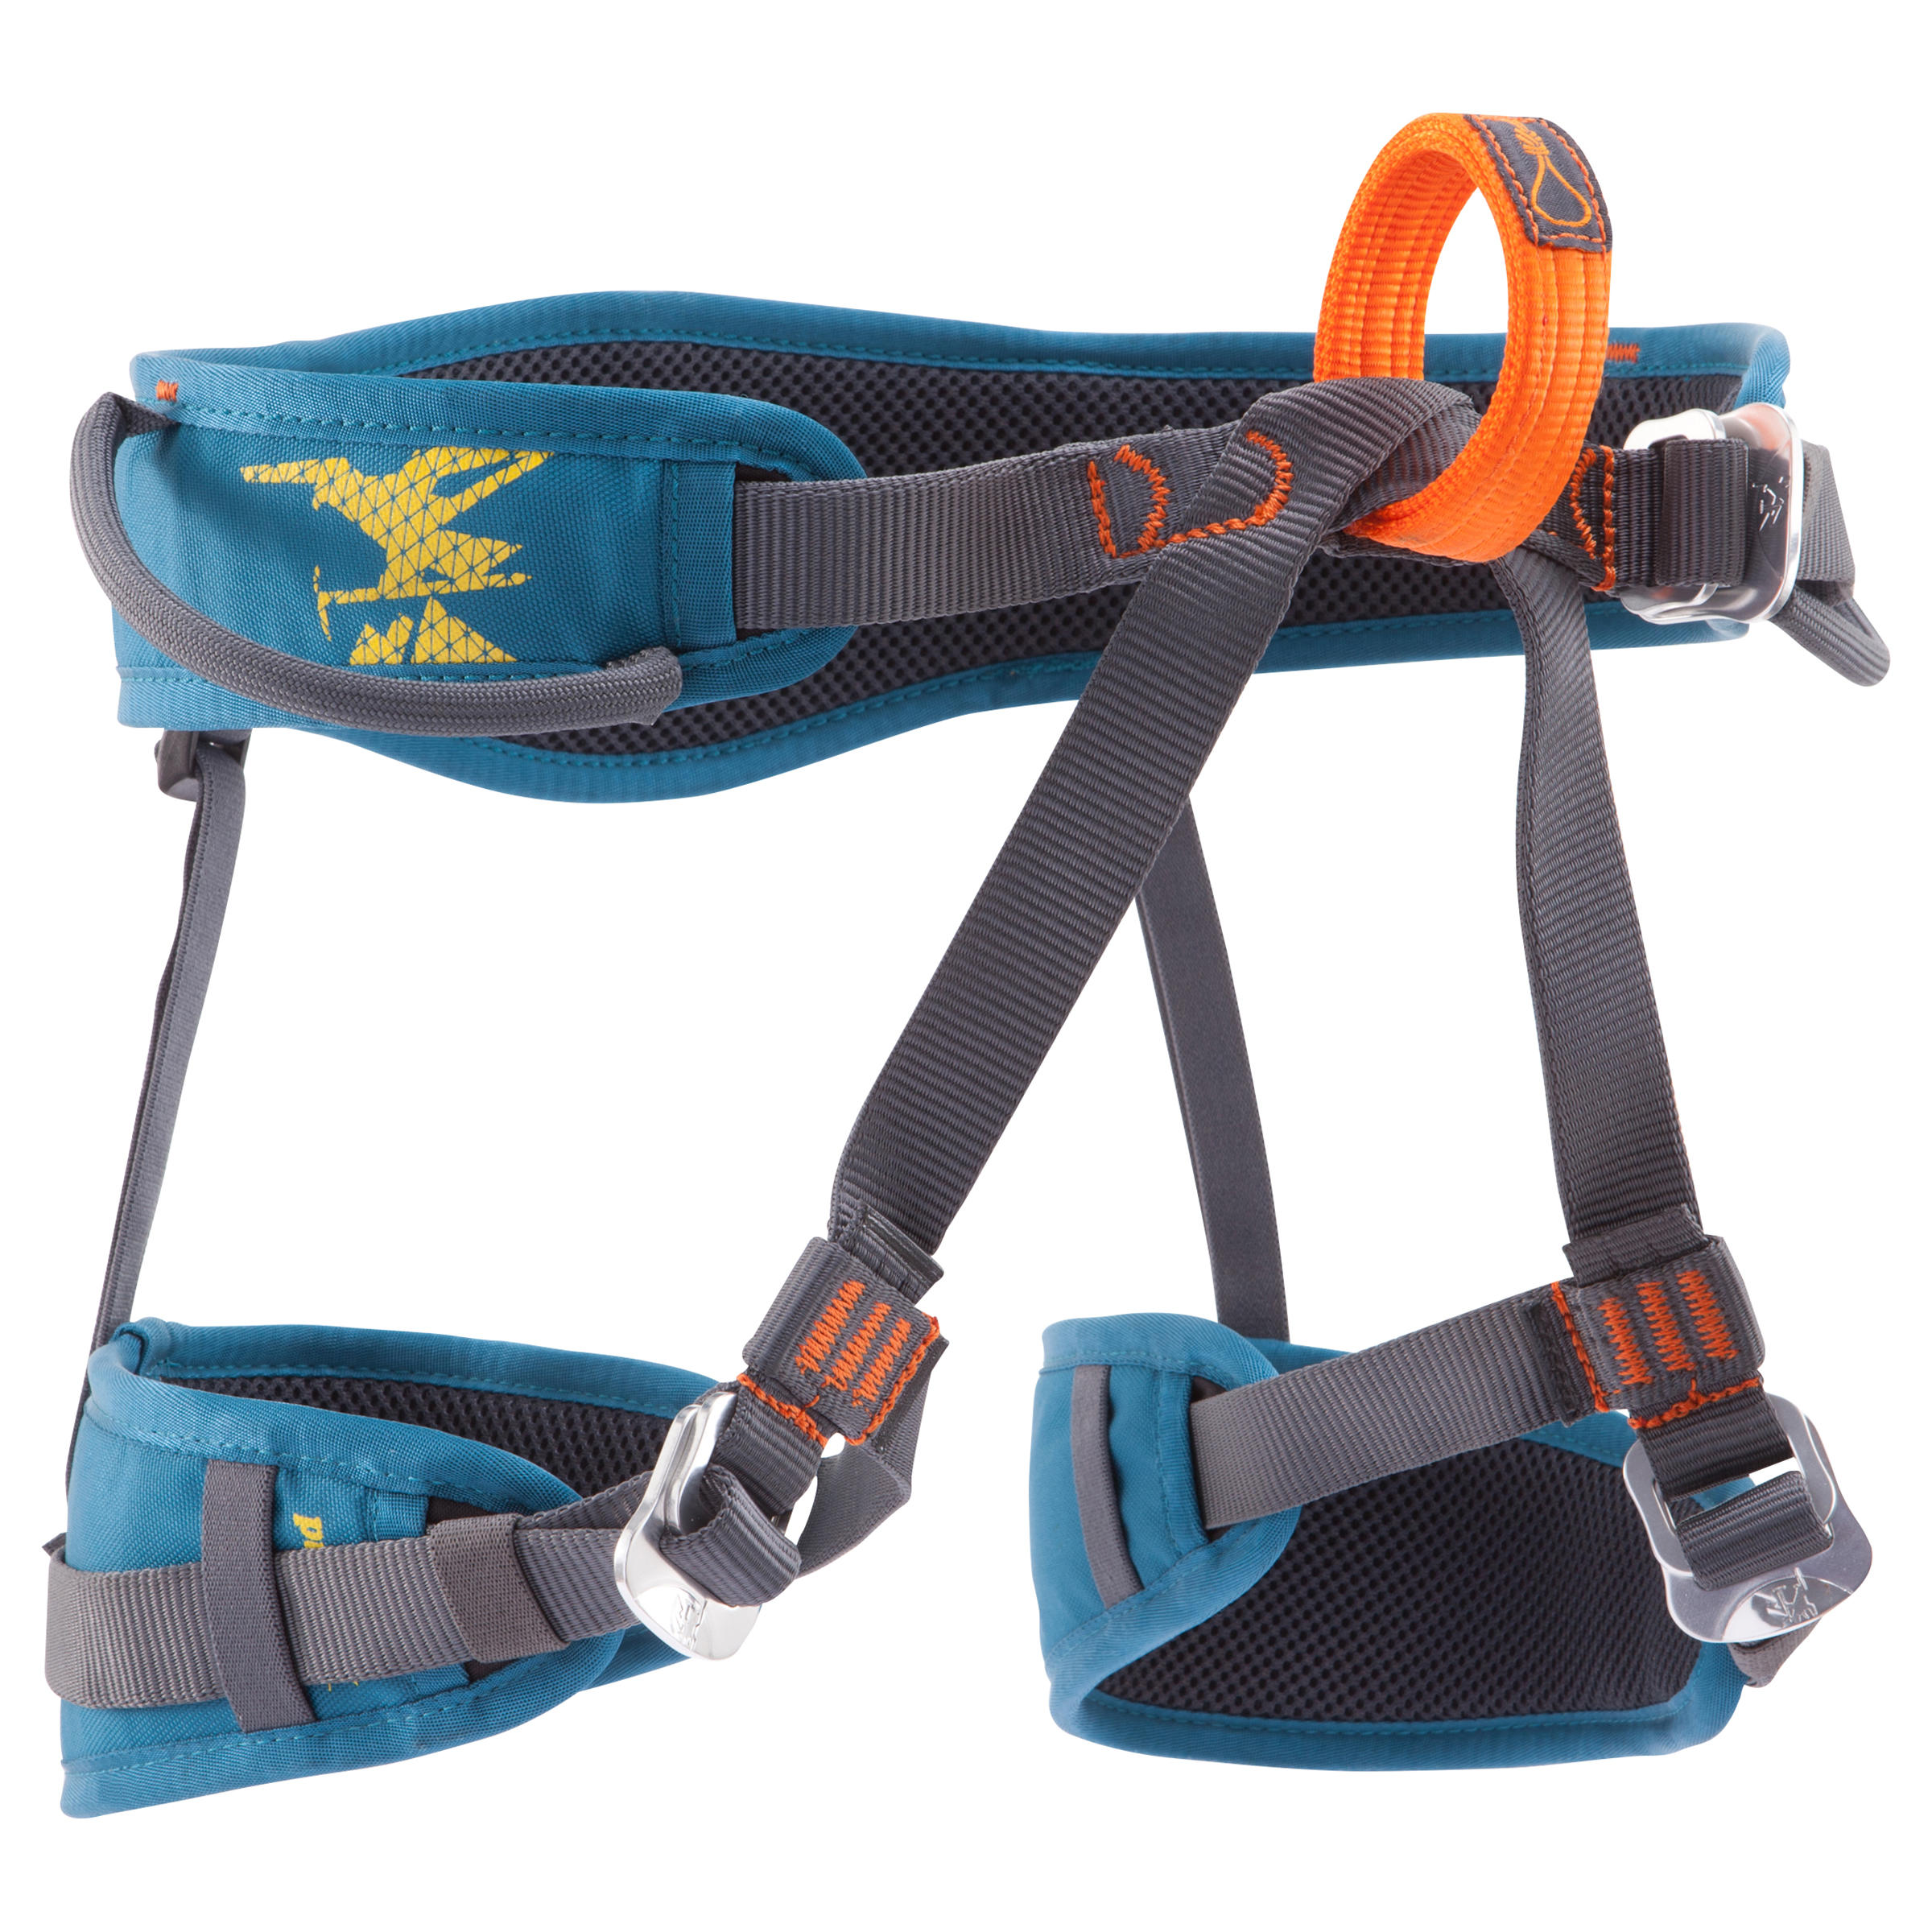 https://contents.mediadecathlon.com/p709799/k$8f4539e3ceffe697abee9731069433ef/climbing-harness-easy-3-blue-simond-8359998.jpg